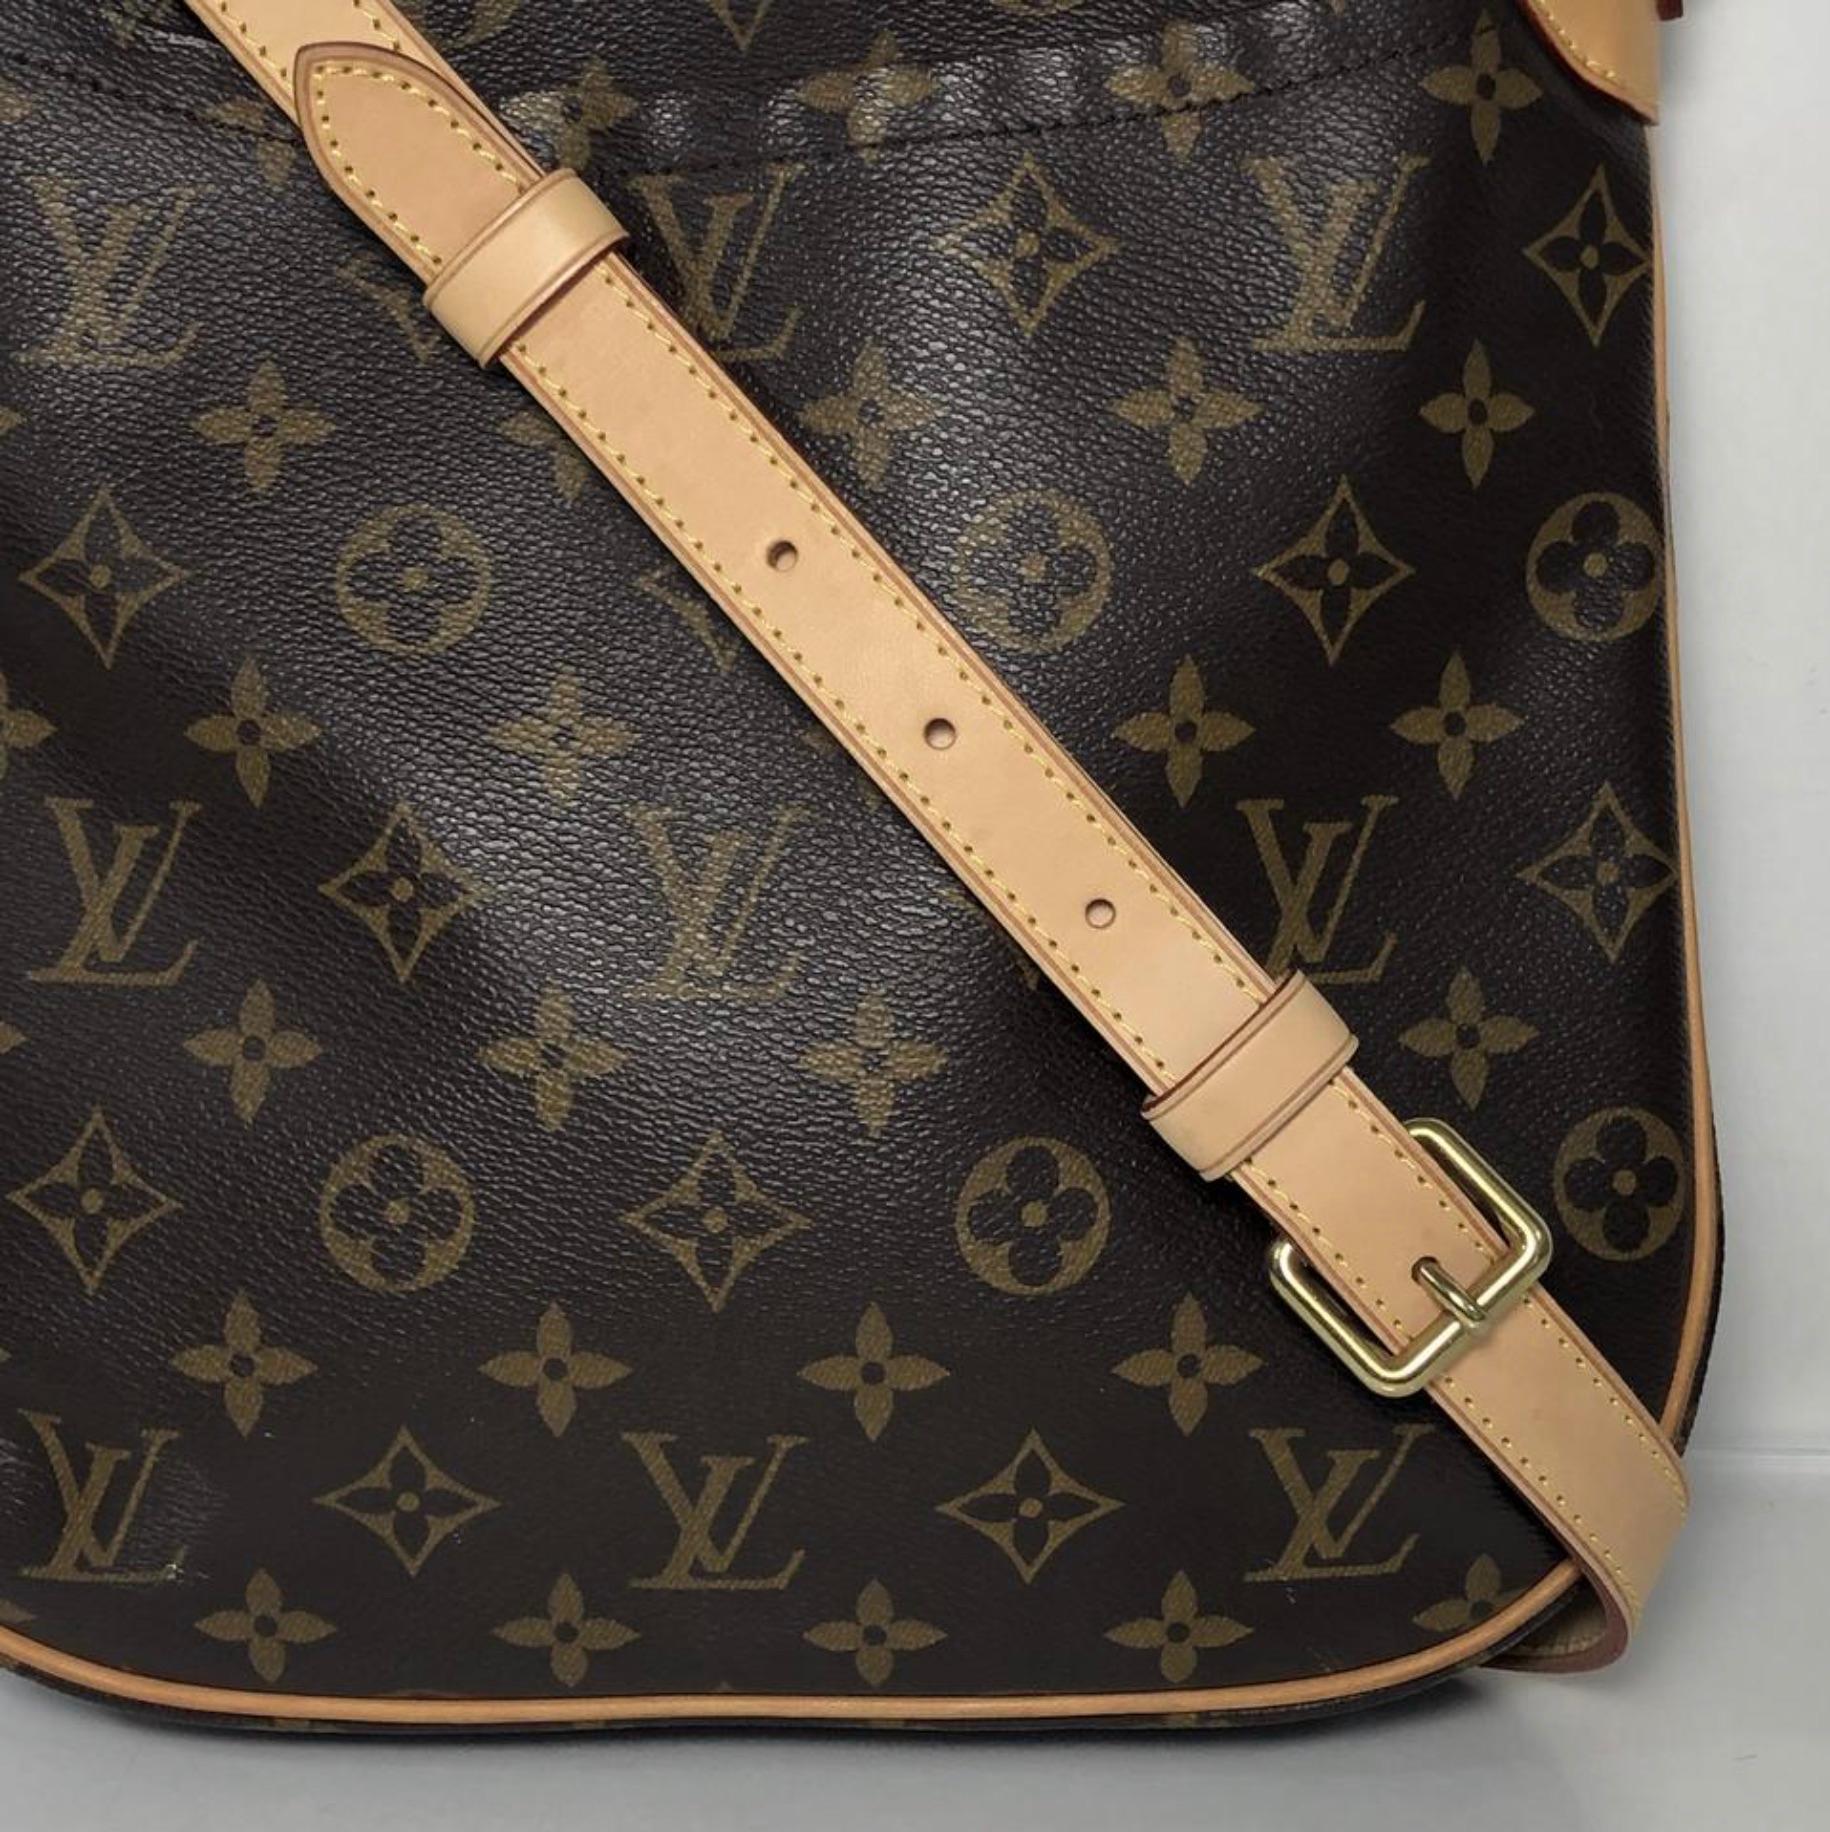  Louis Vuitton Monogram Odeon PM Crossbody Shoulder Handbag In Excellent Condition For Sale In Saint Charles, IL